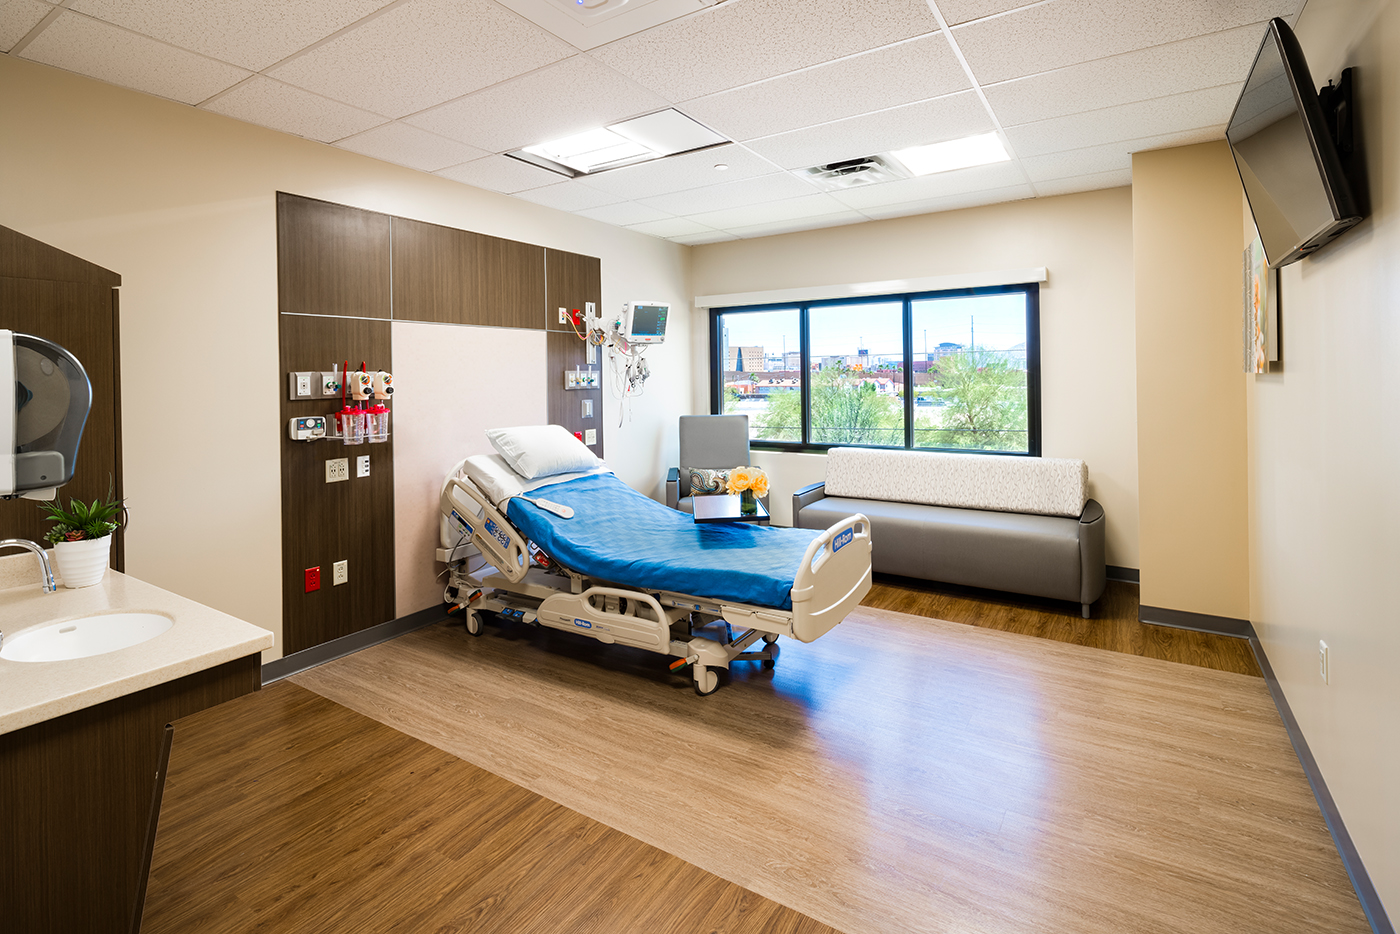 Valley Hospital patient room